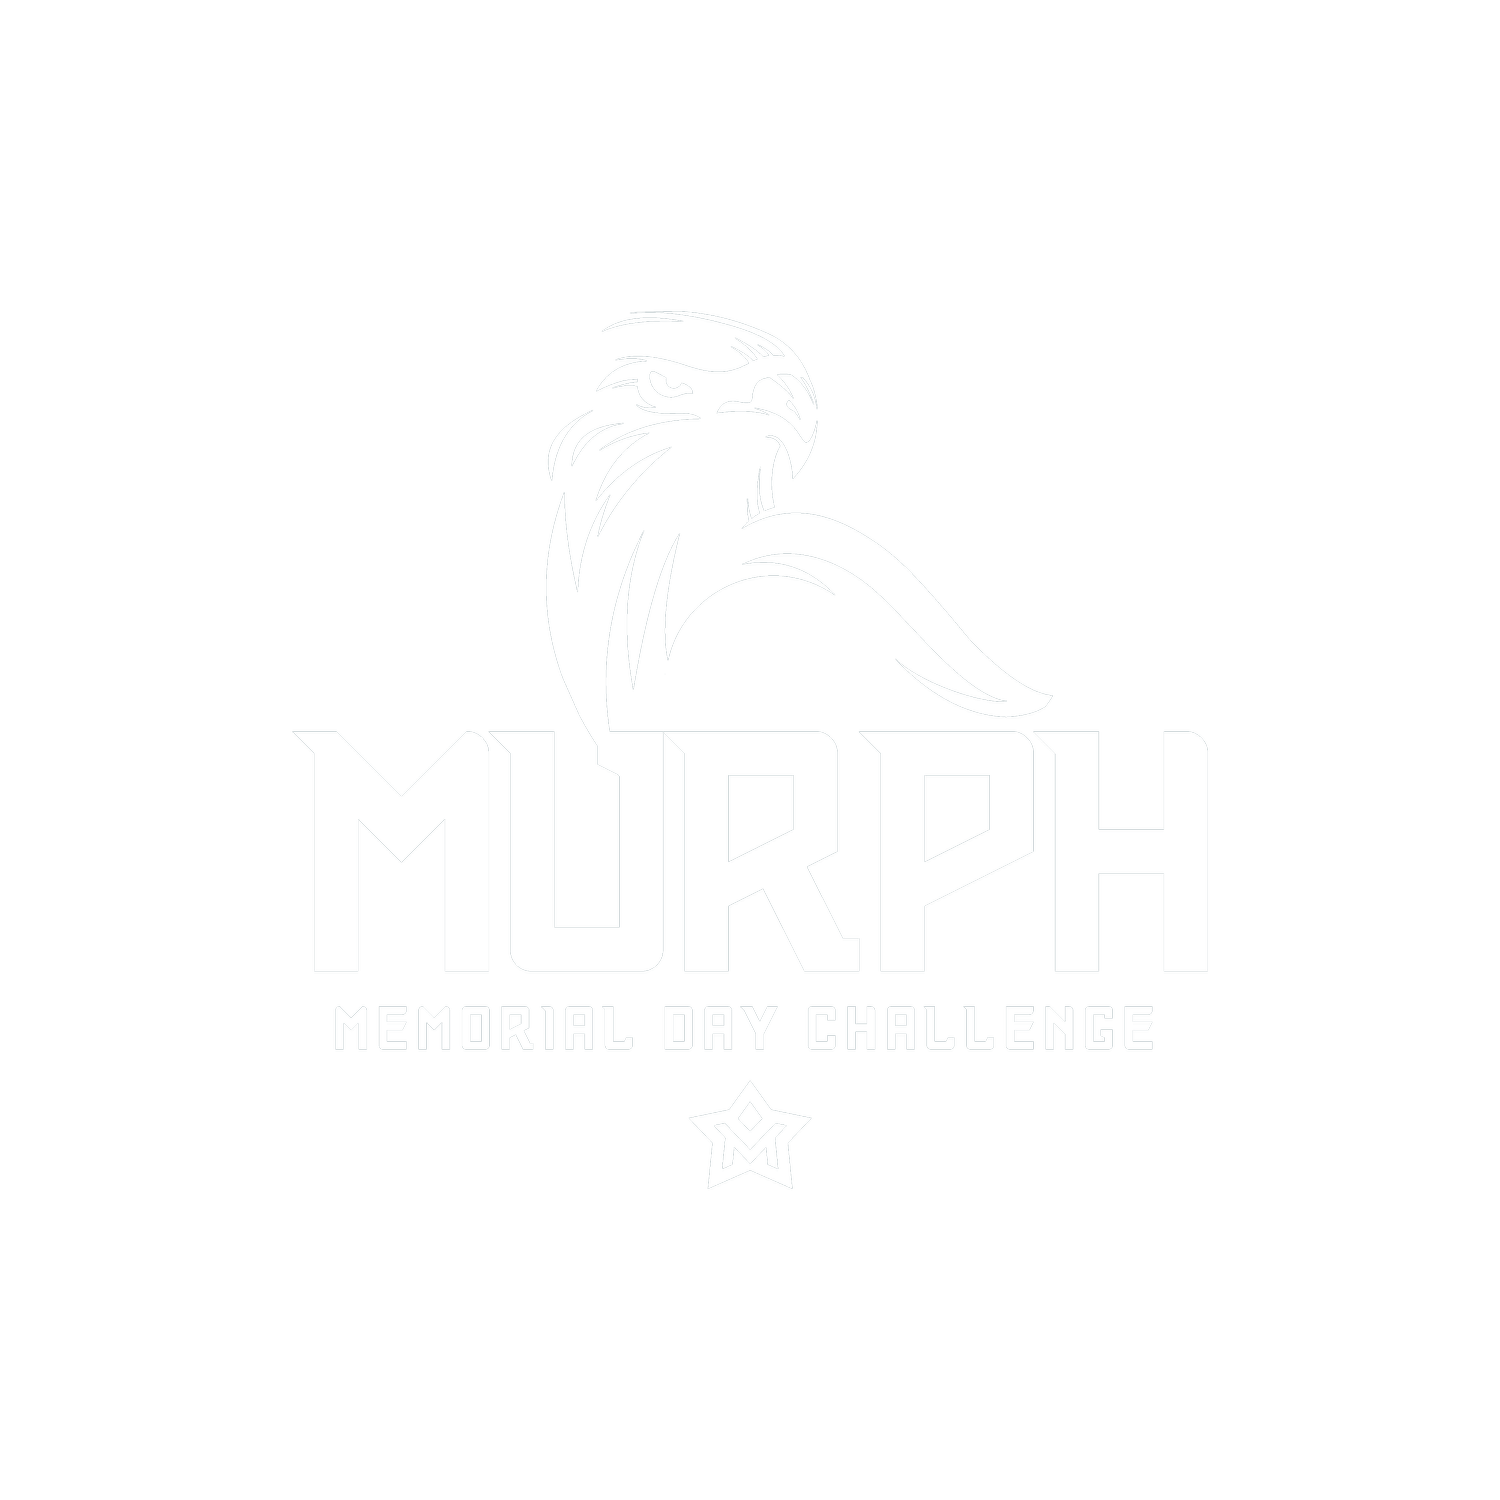 Memorial Day Challenge